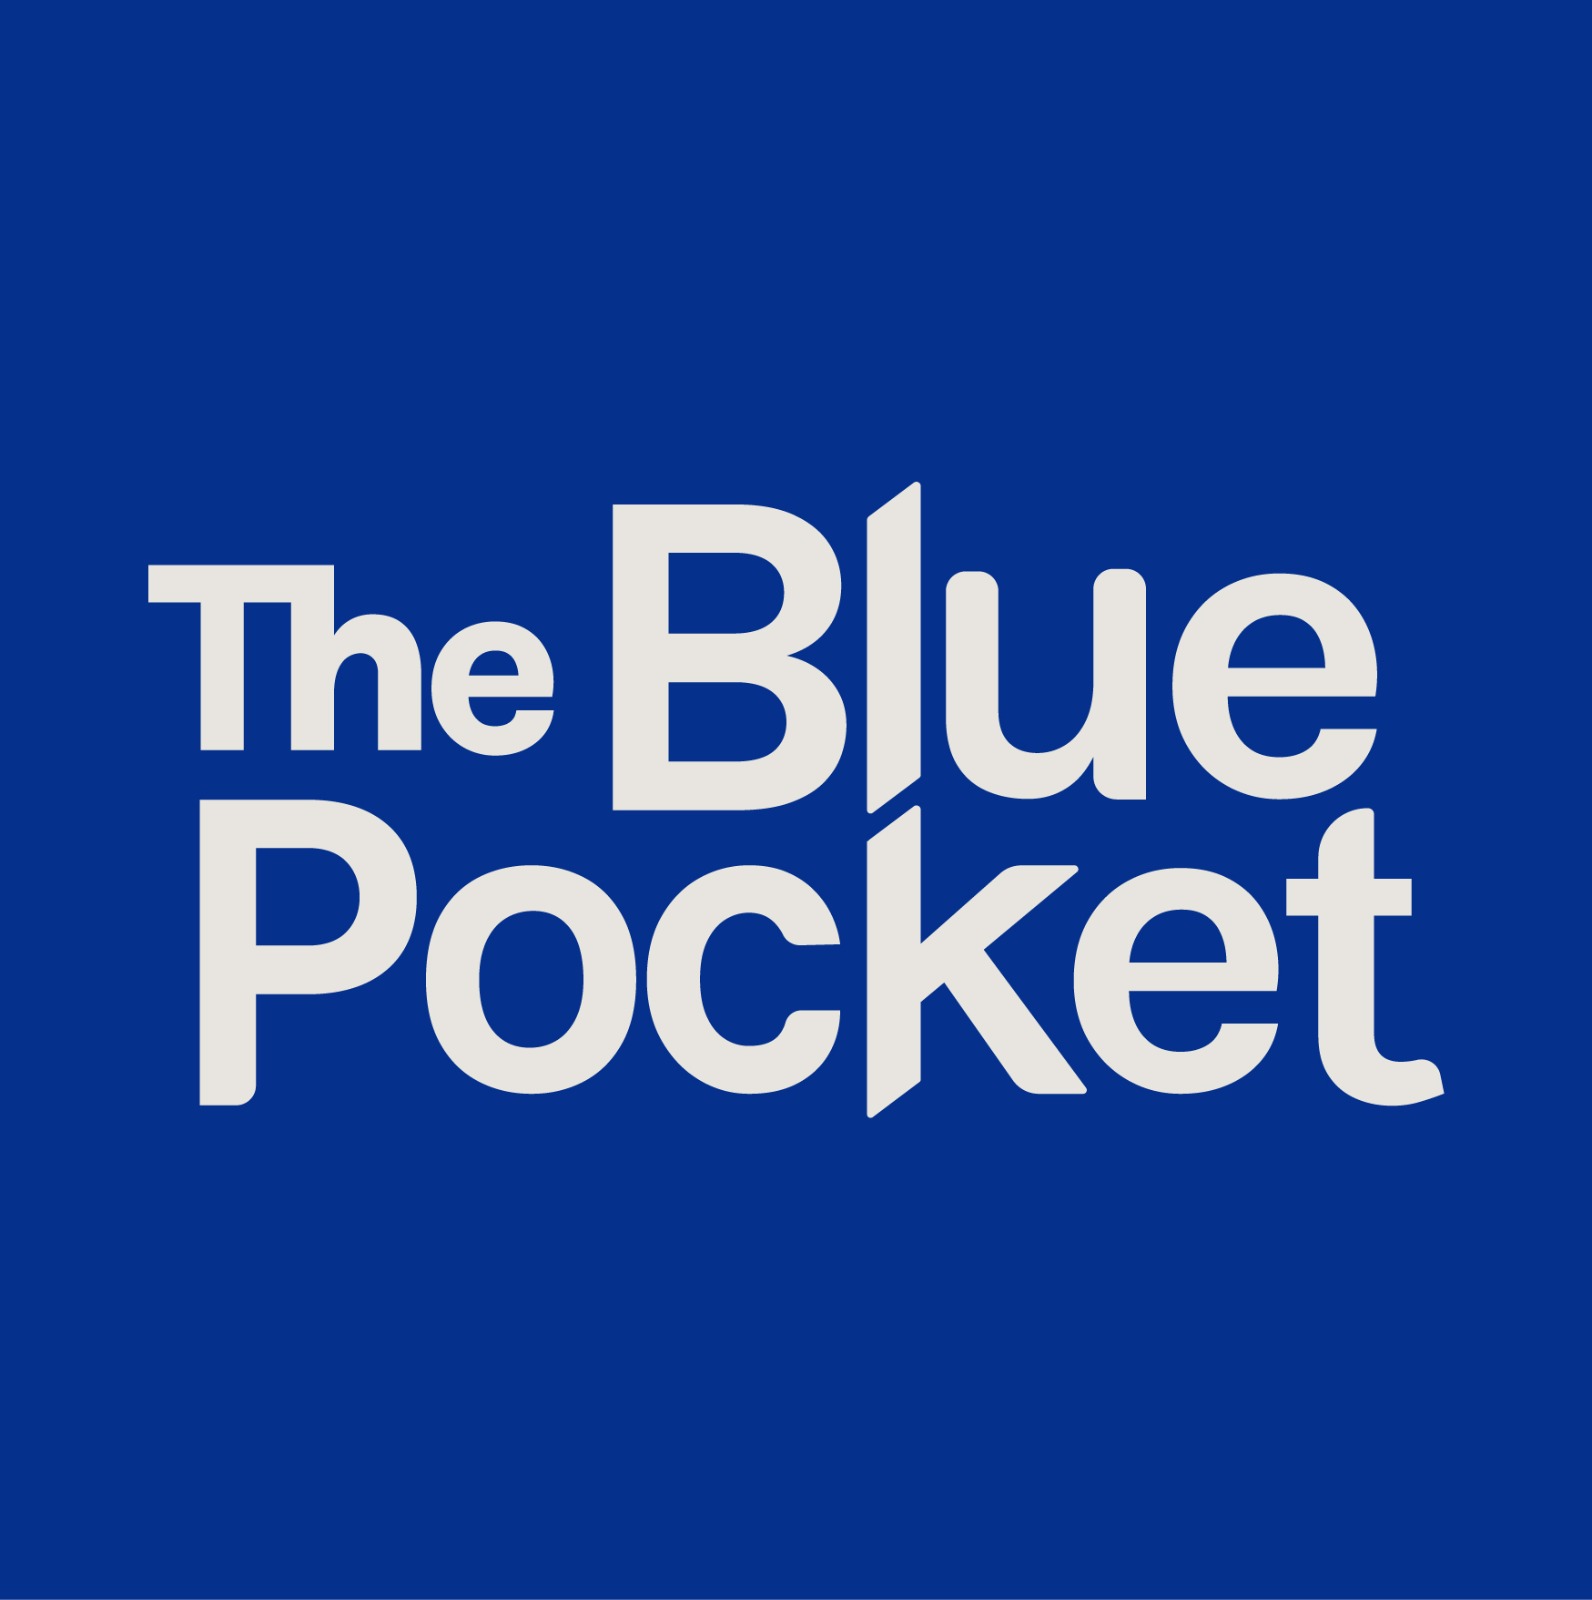 The Blue Pocket Services Pte. Ltd. logo